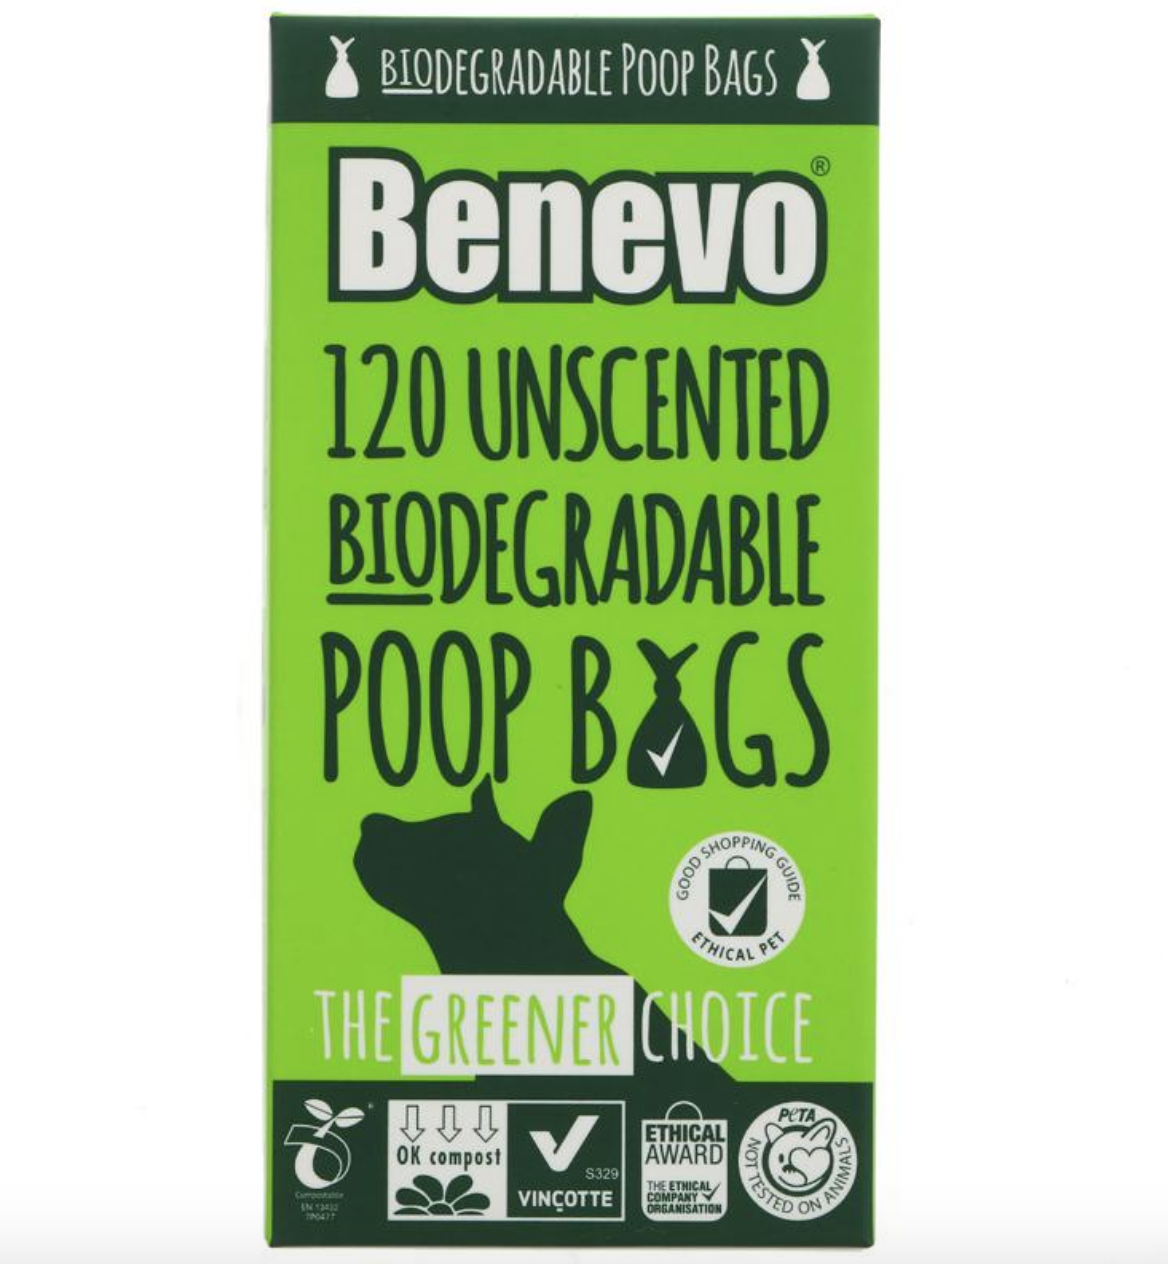 Biodegradable Dog Poo Bags | Benevo